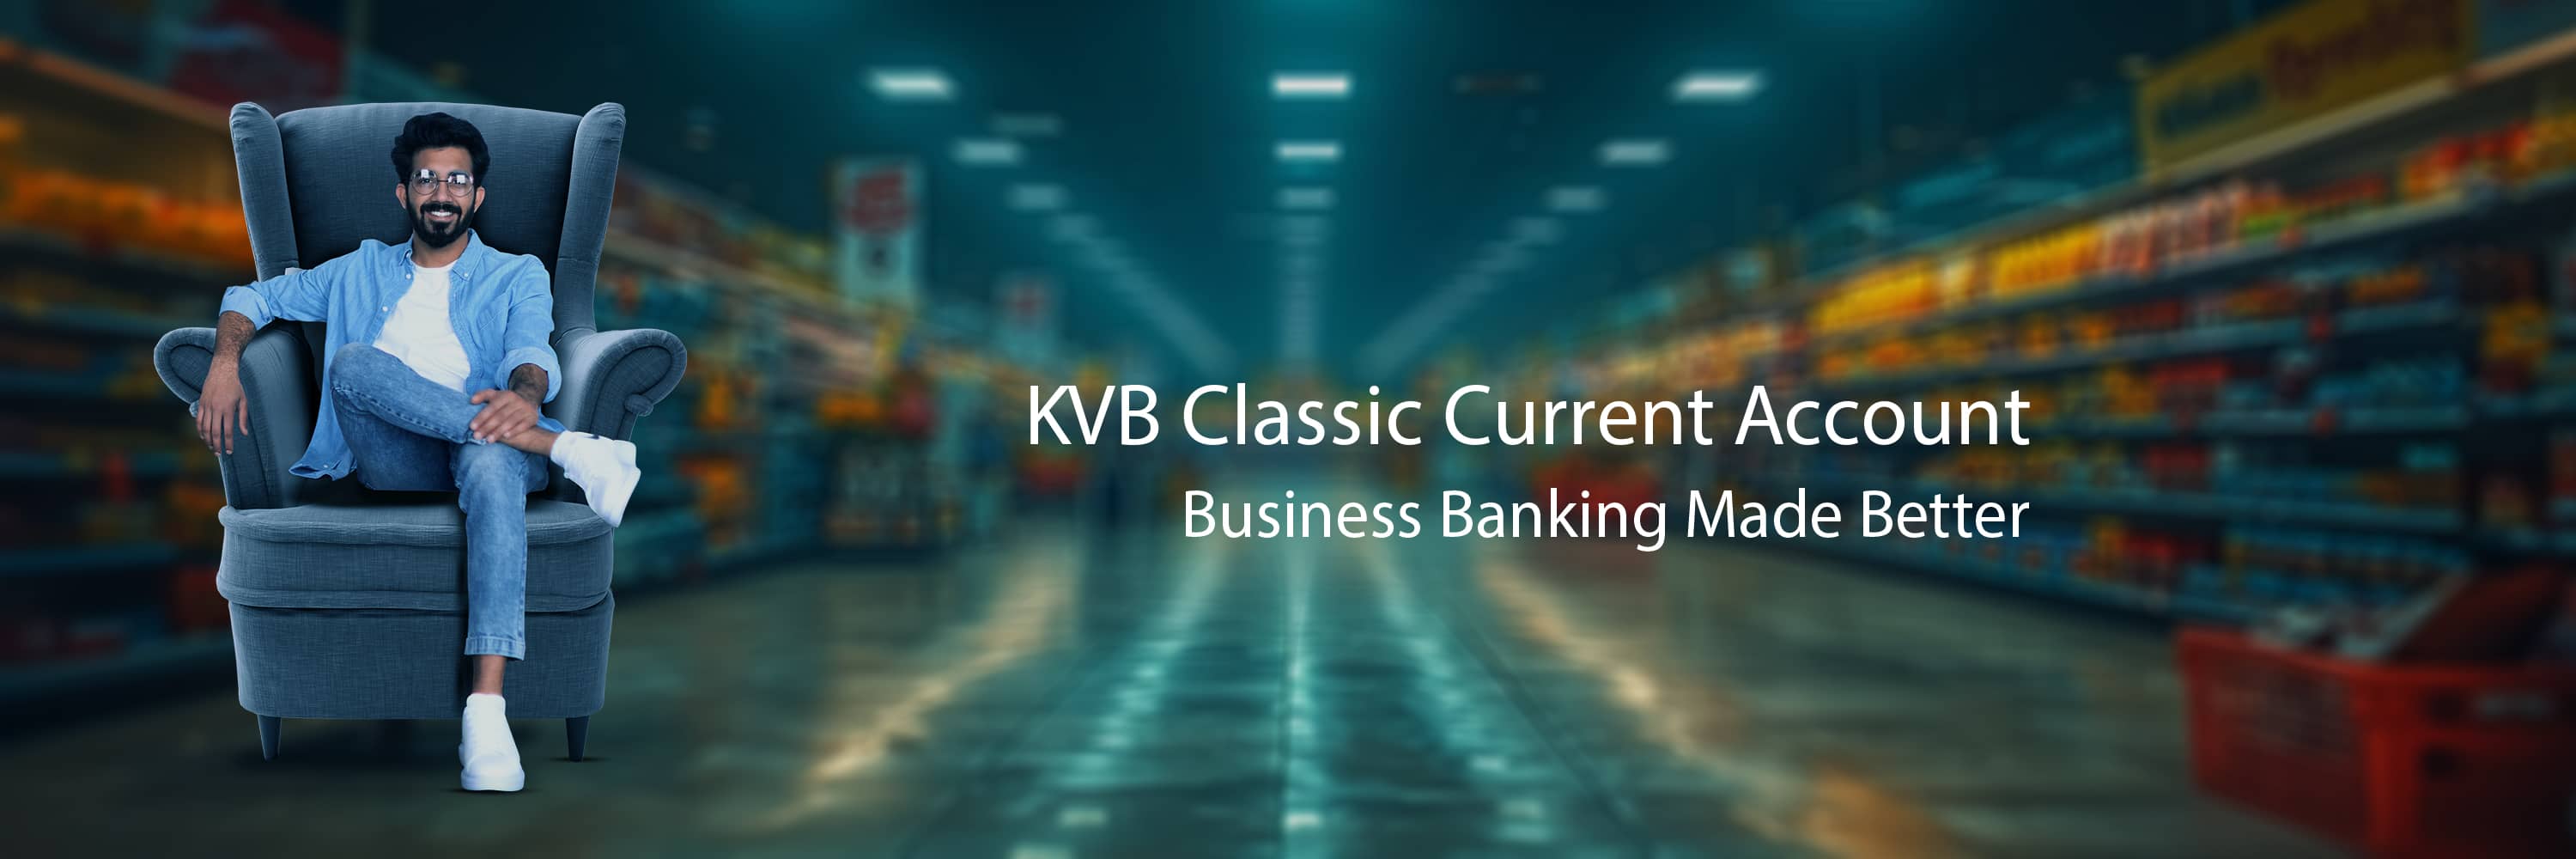 KVB Classic Current Account